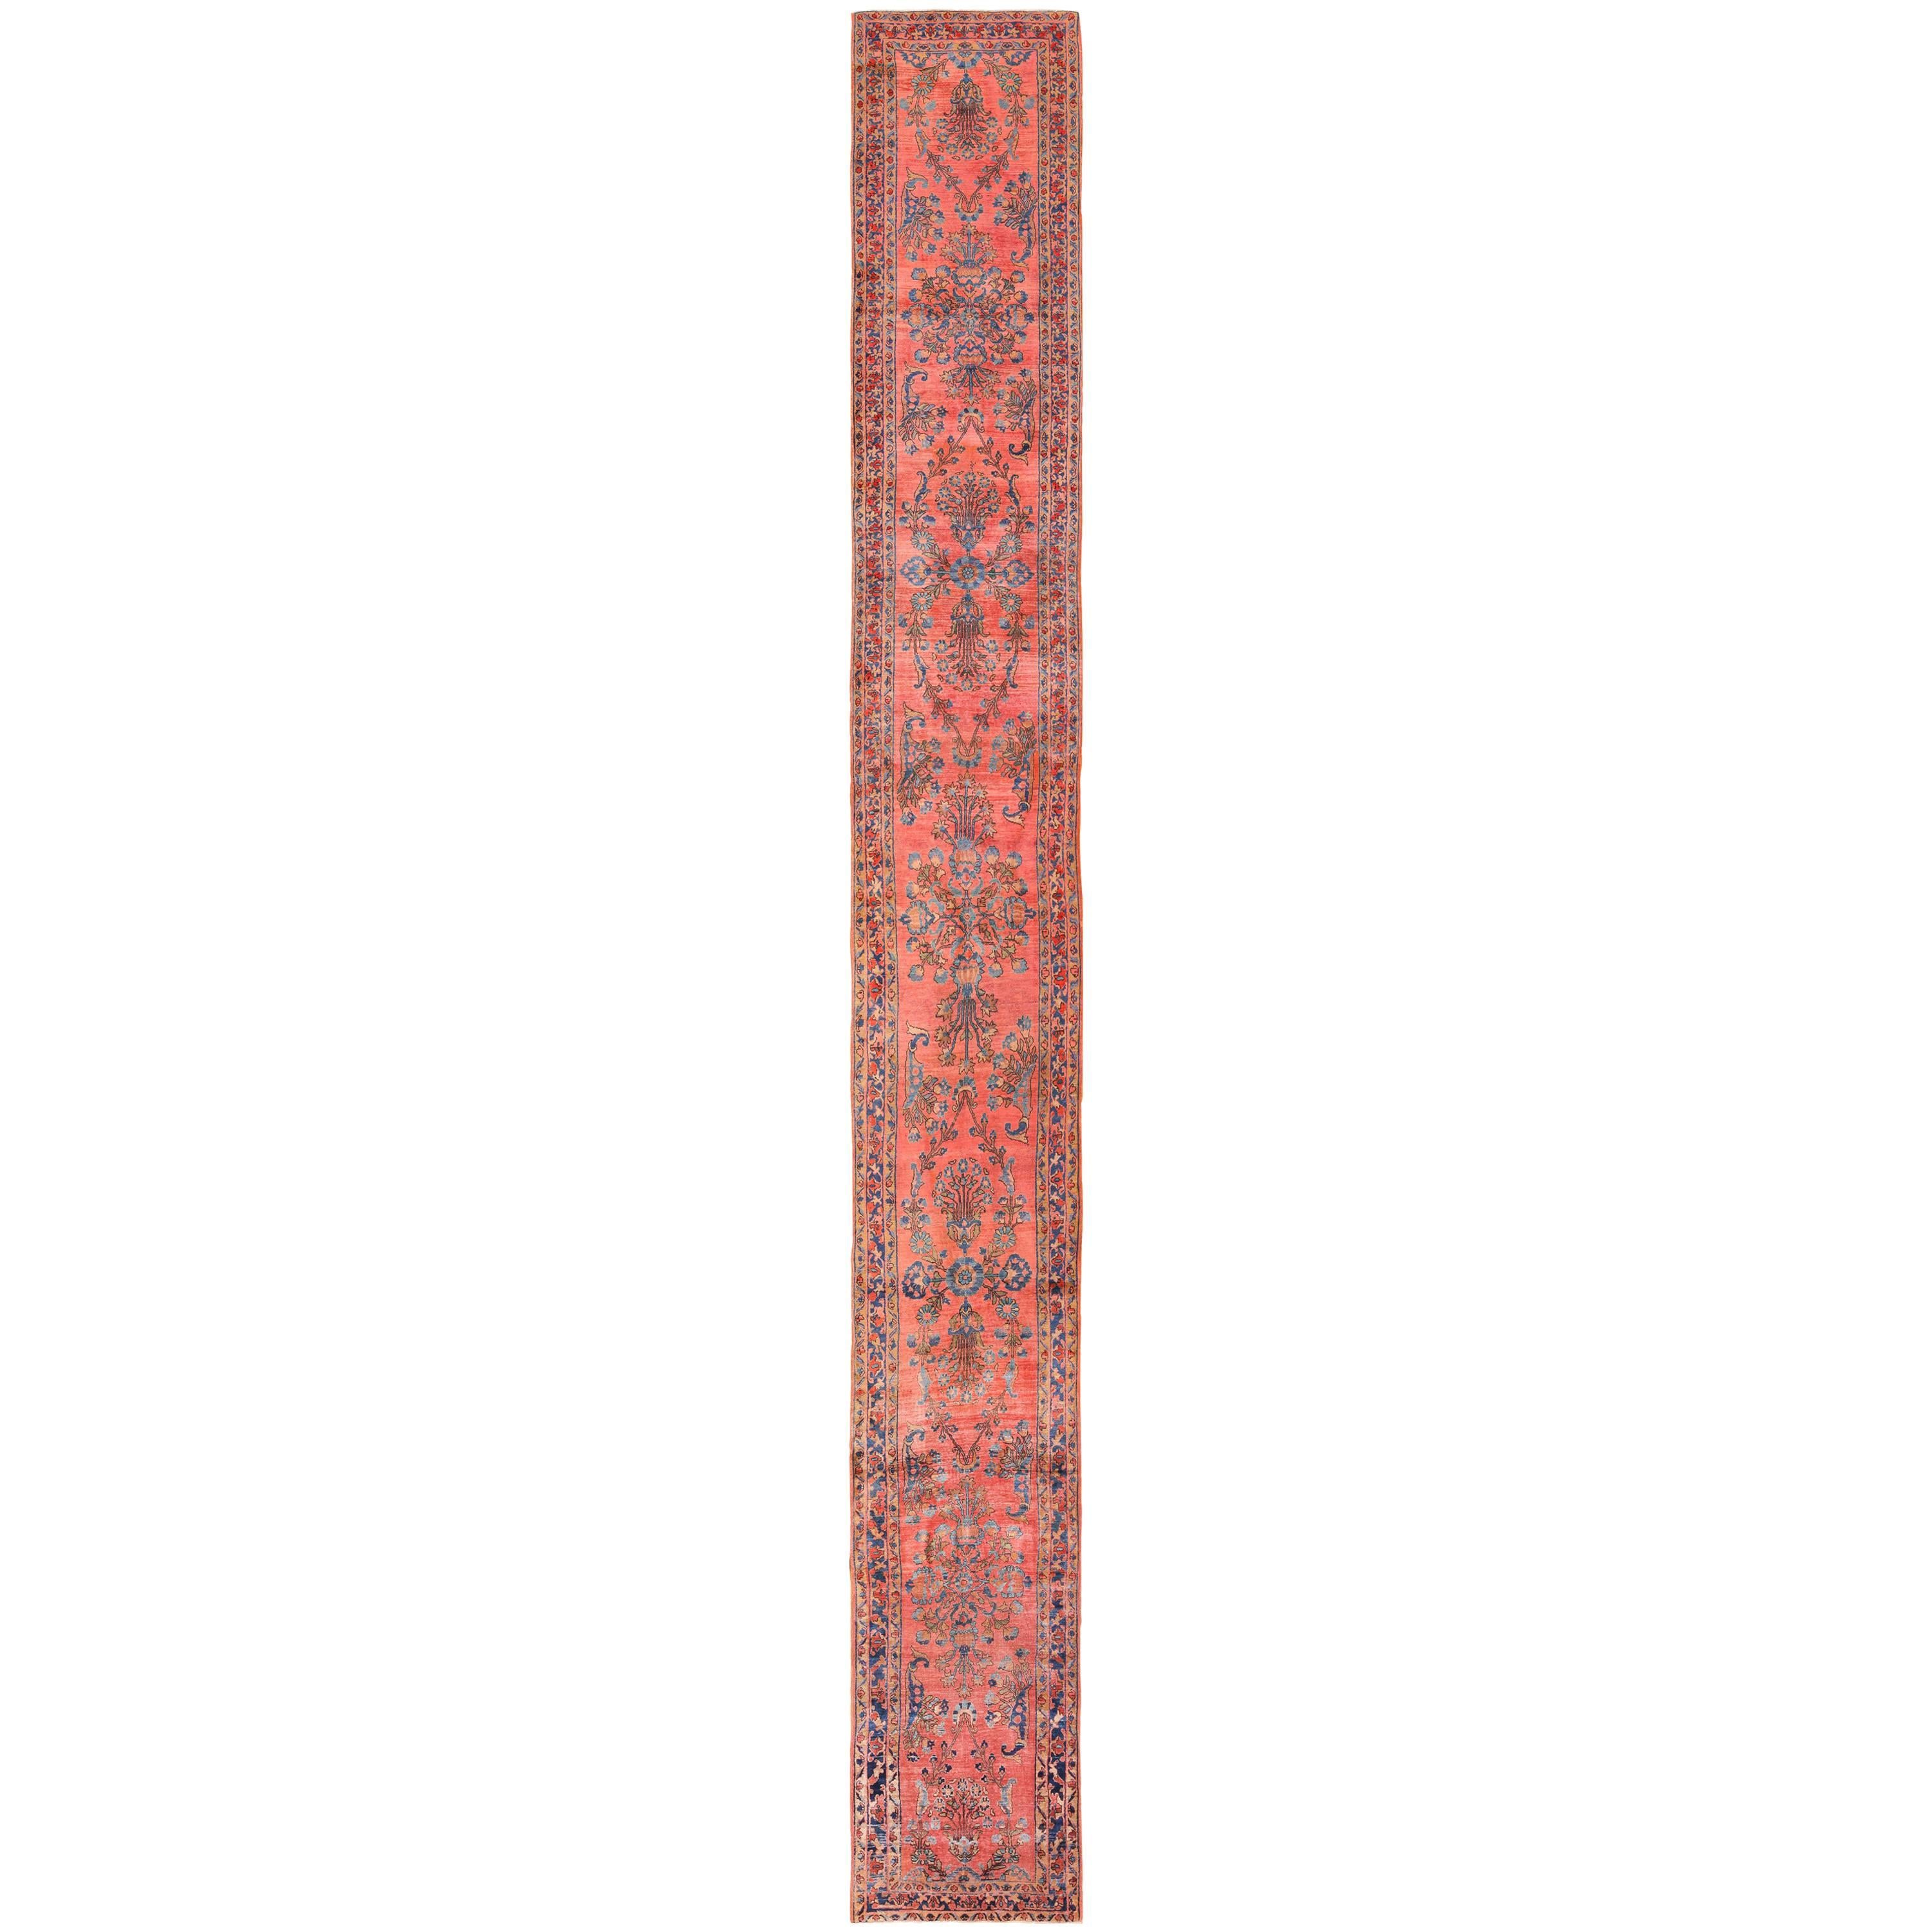 Long and Narrow Antique Persian Sarouk Runner Rug